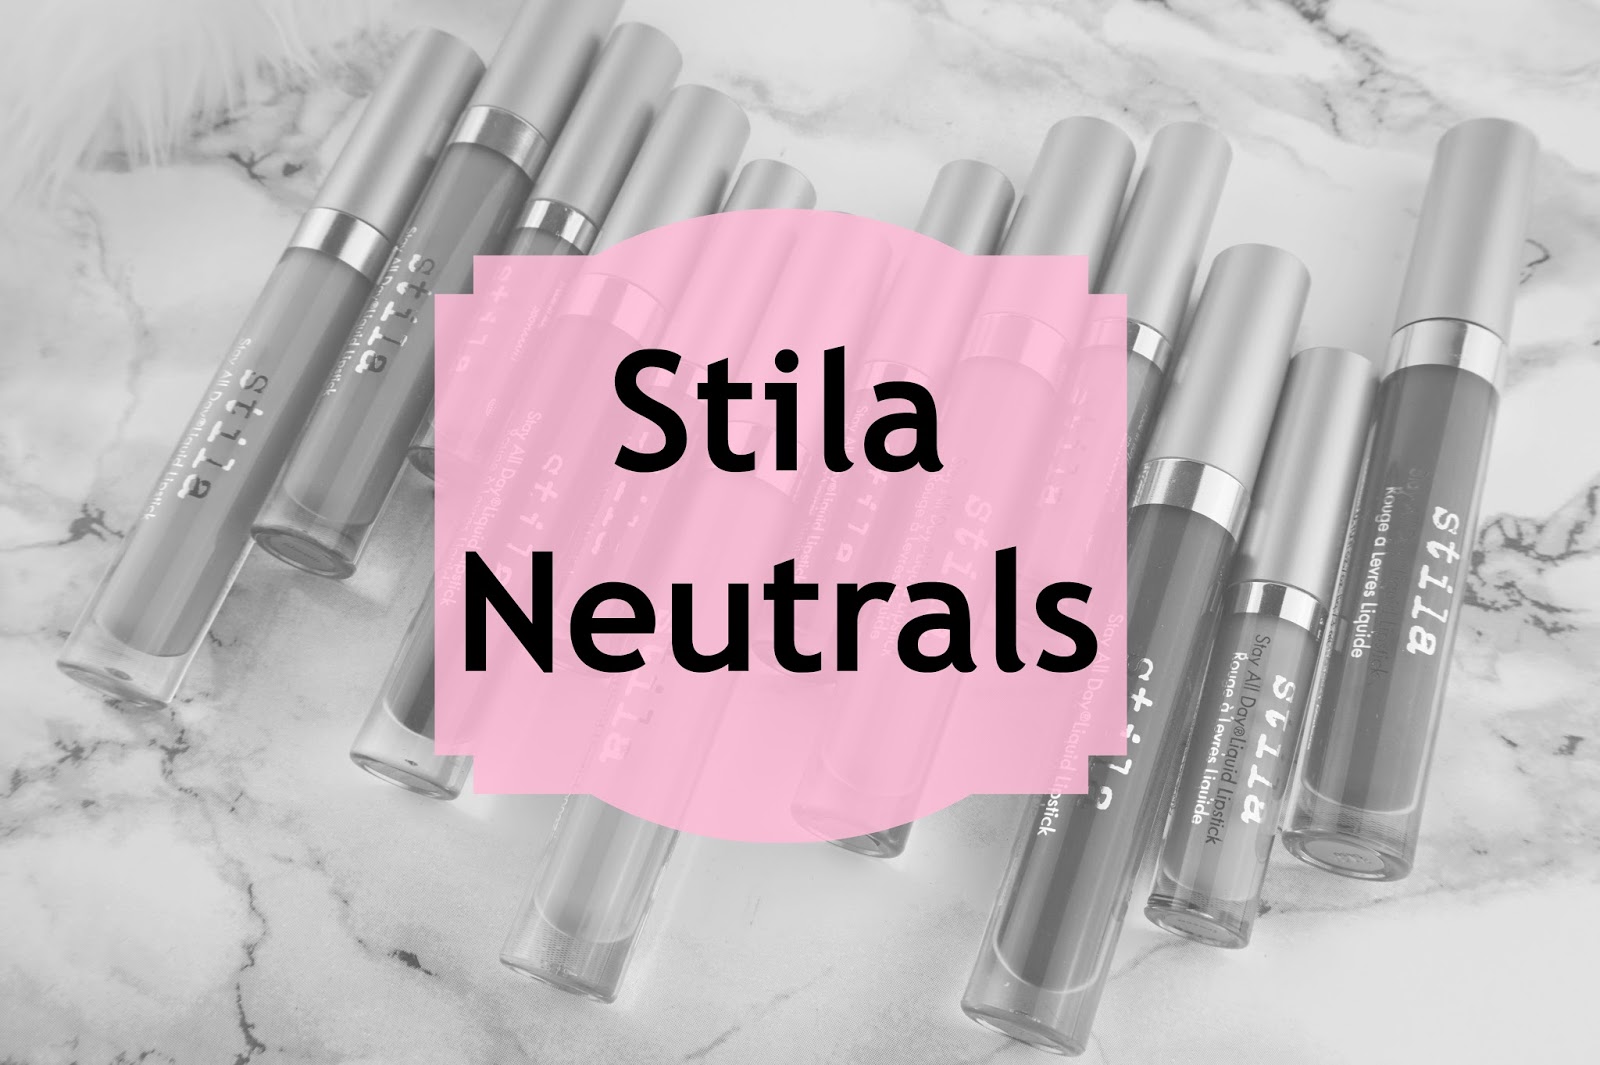 Fave Neutral Liquid Lipsticks from Stila